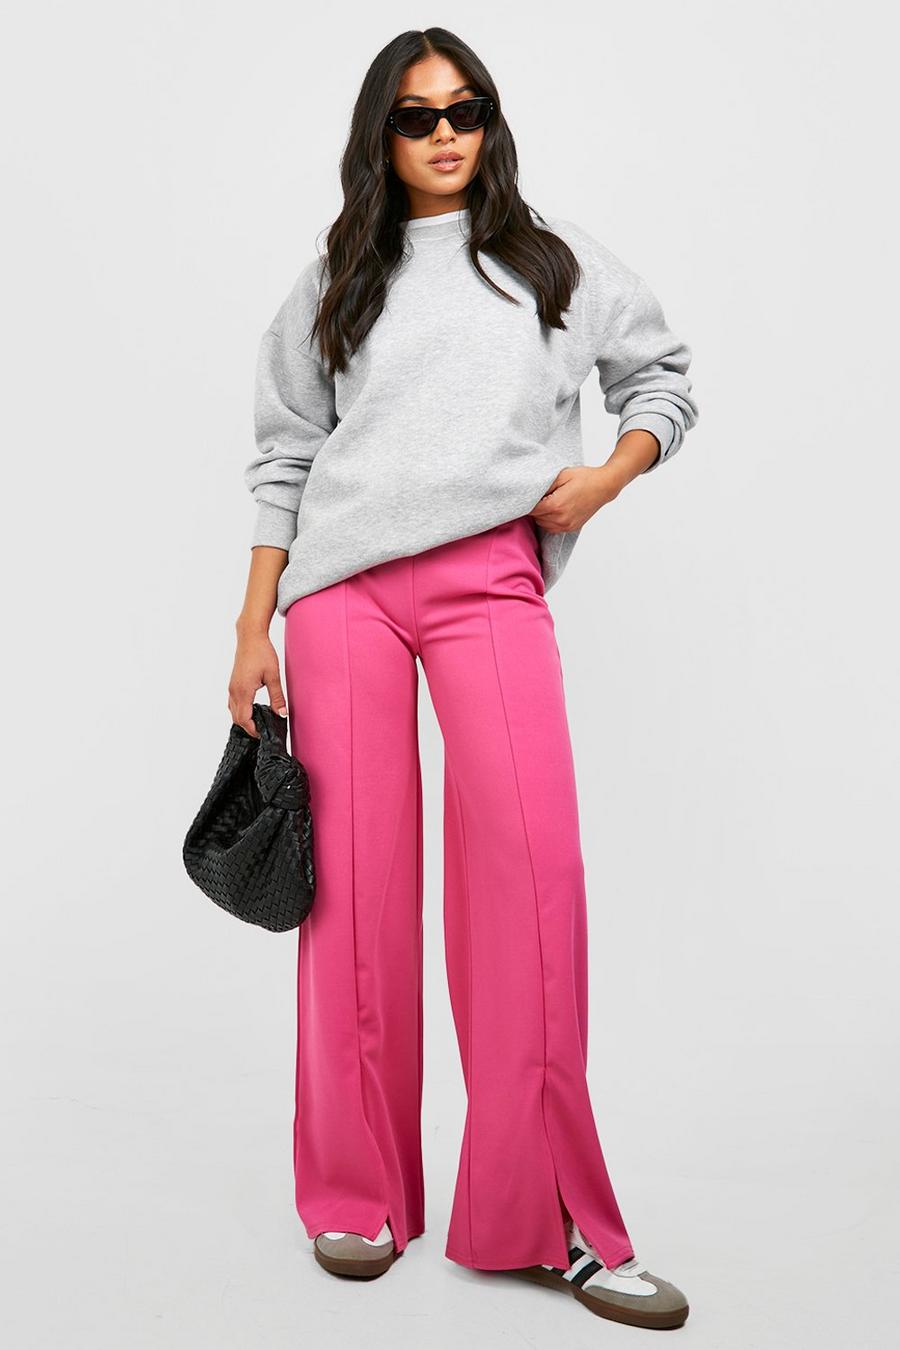 Pantaloni Petite in Stretch con cuciture e spacco frontale, Hot pink